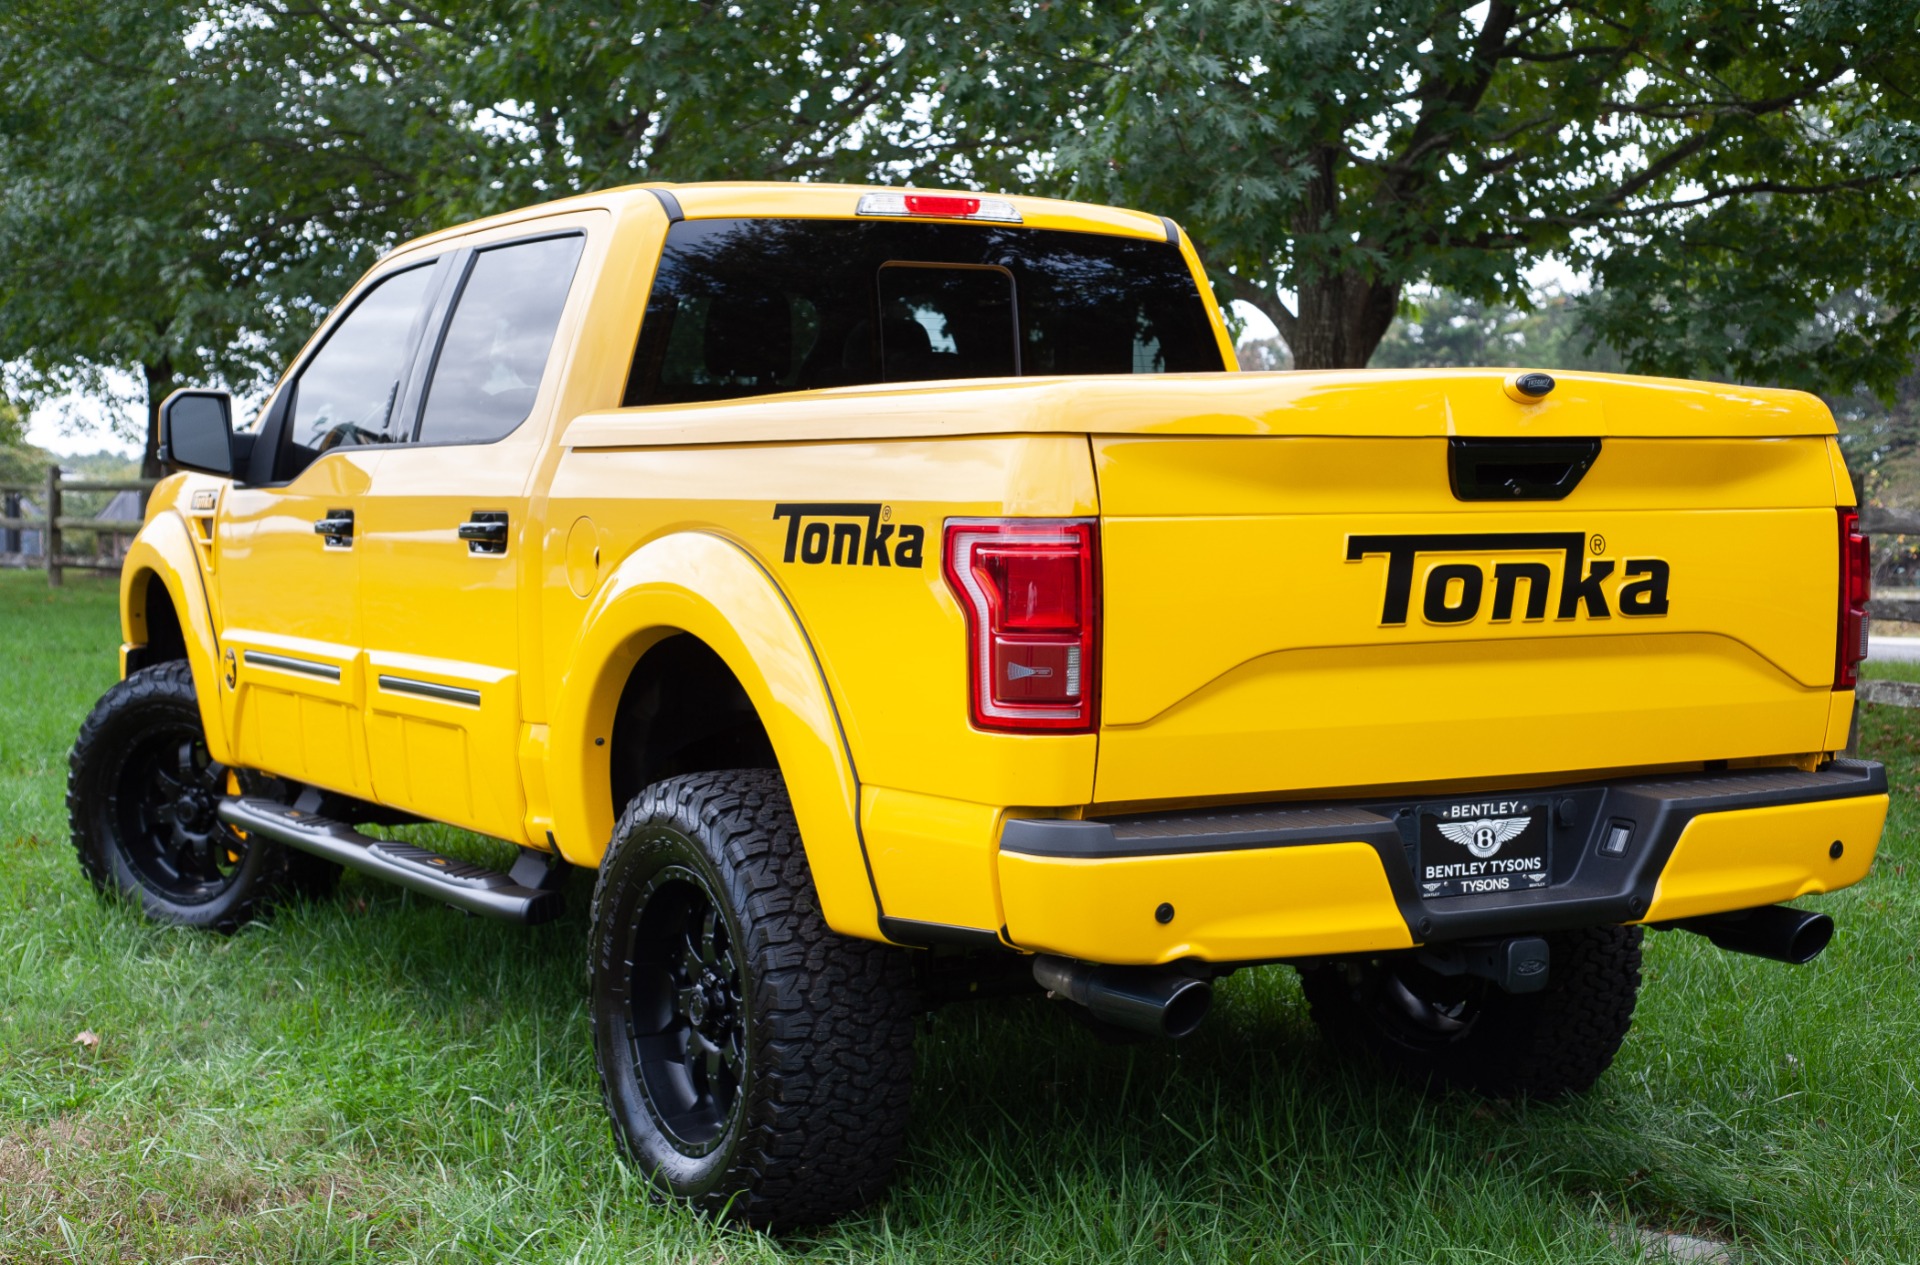 2014 ford tonka truck